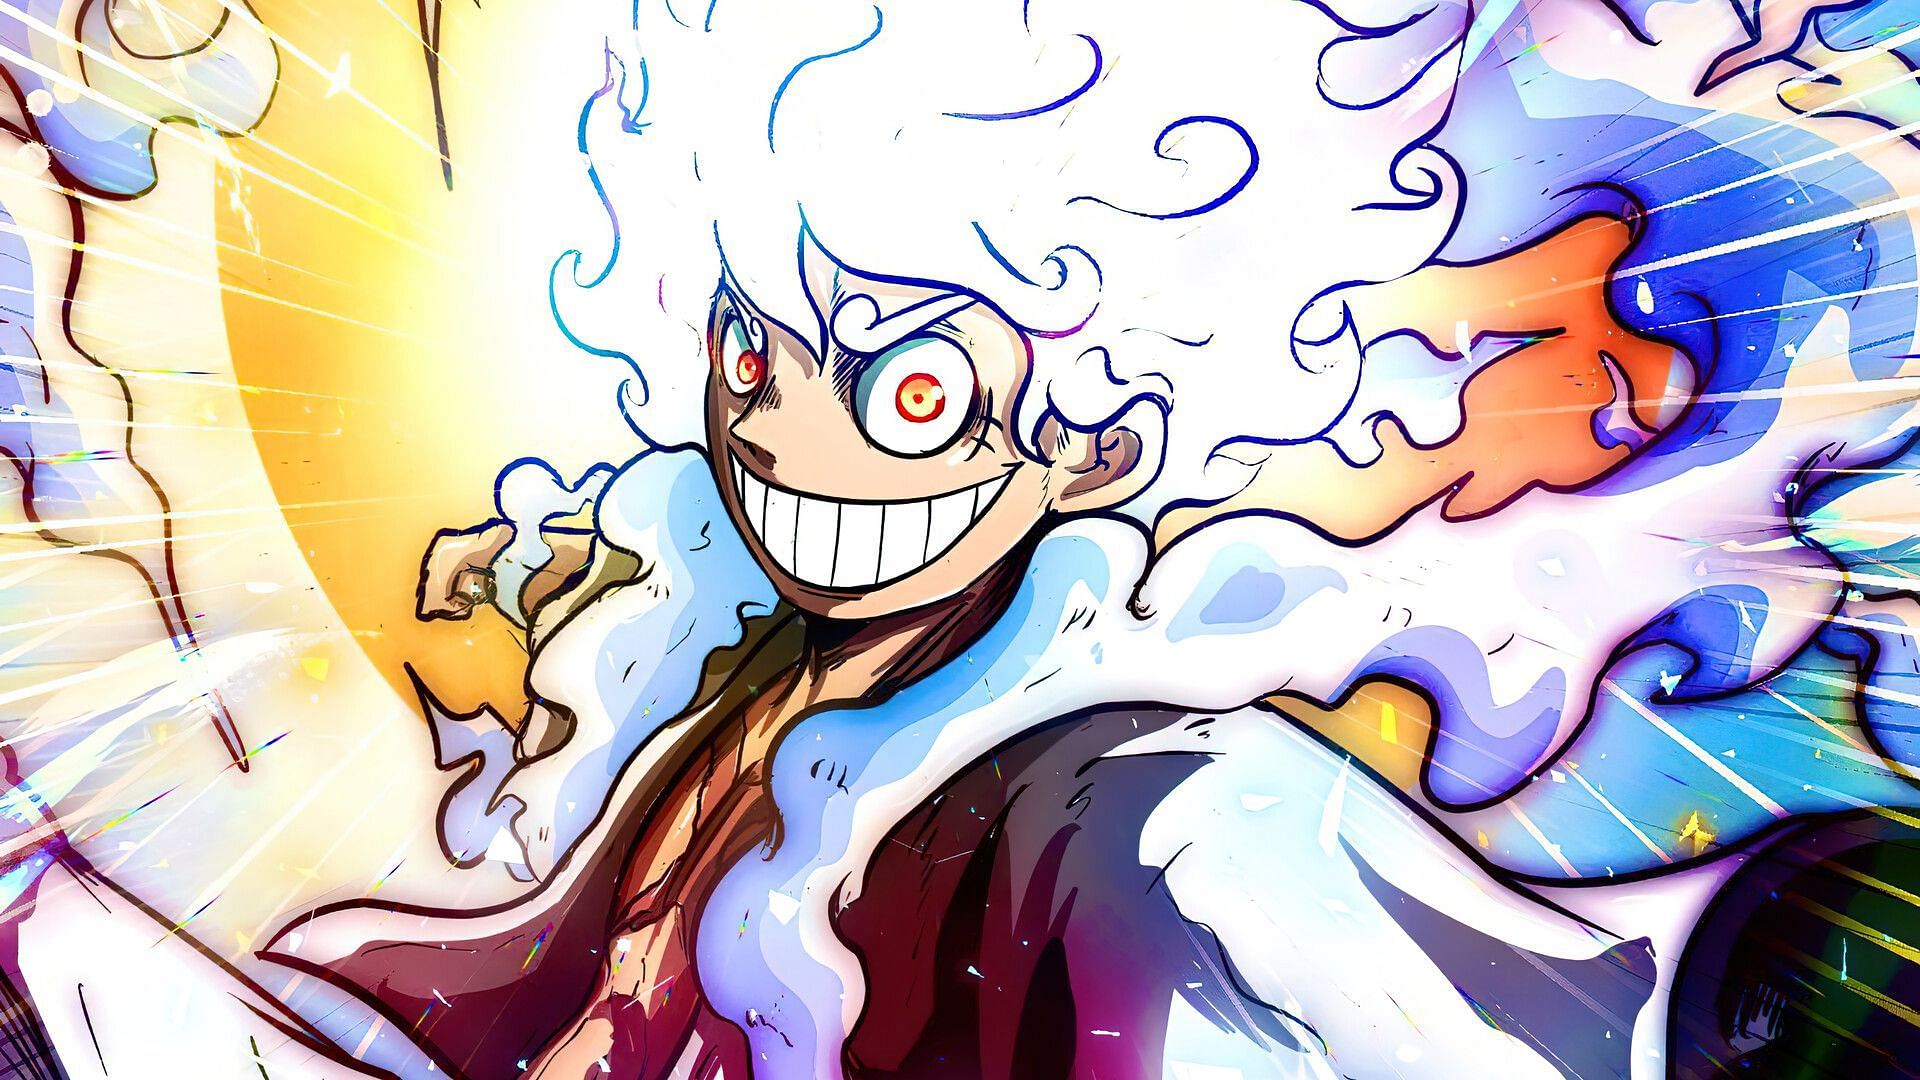 &quot;Strawhat&quot; Monkey D. Luffy (Image via Eiichiro Oda/Shueisha, One Piece)